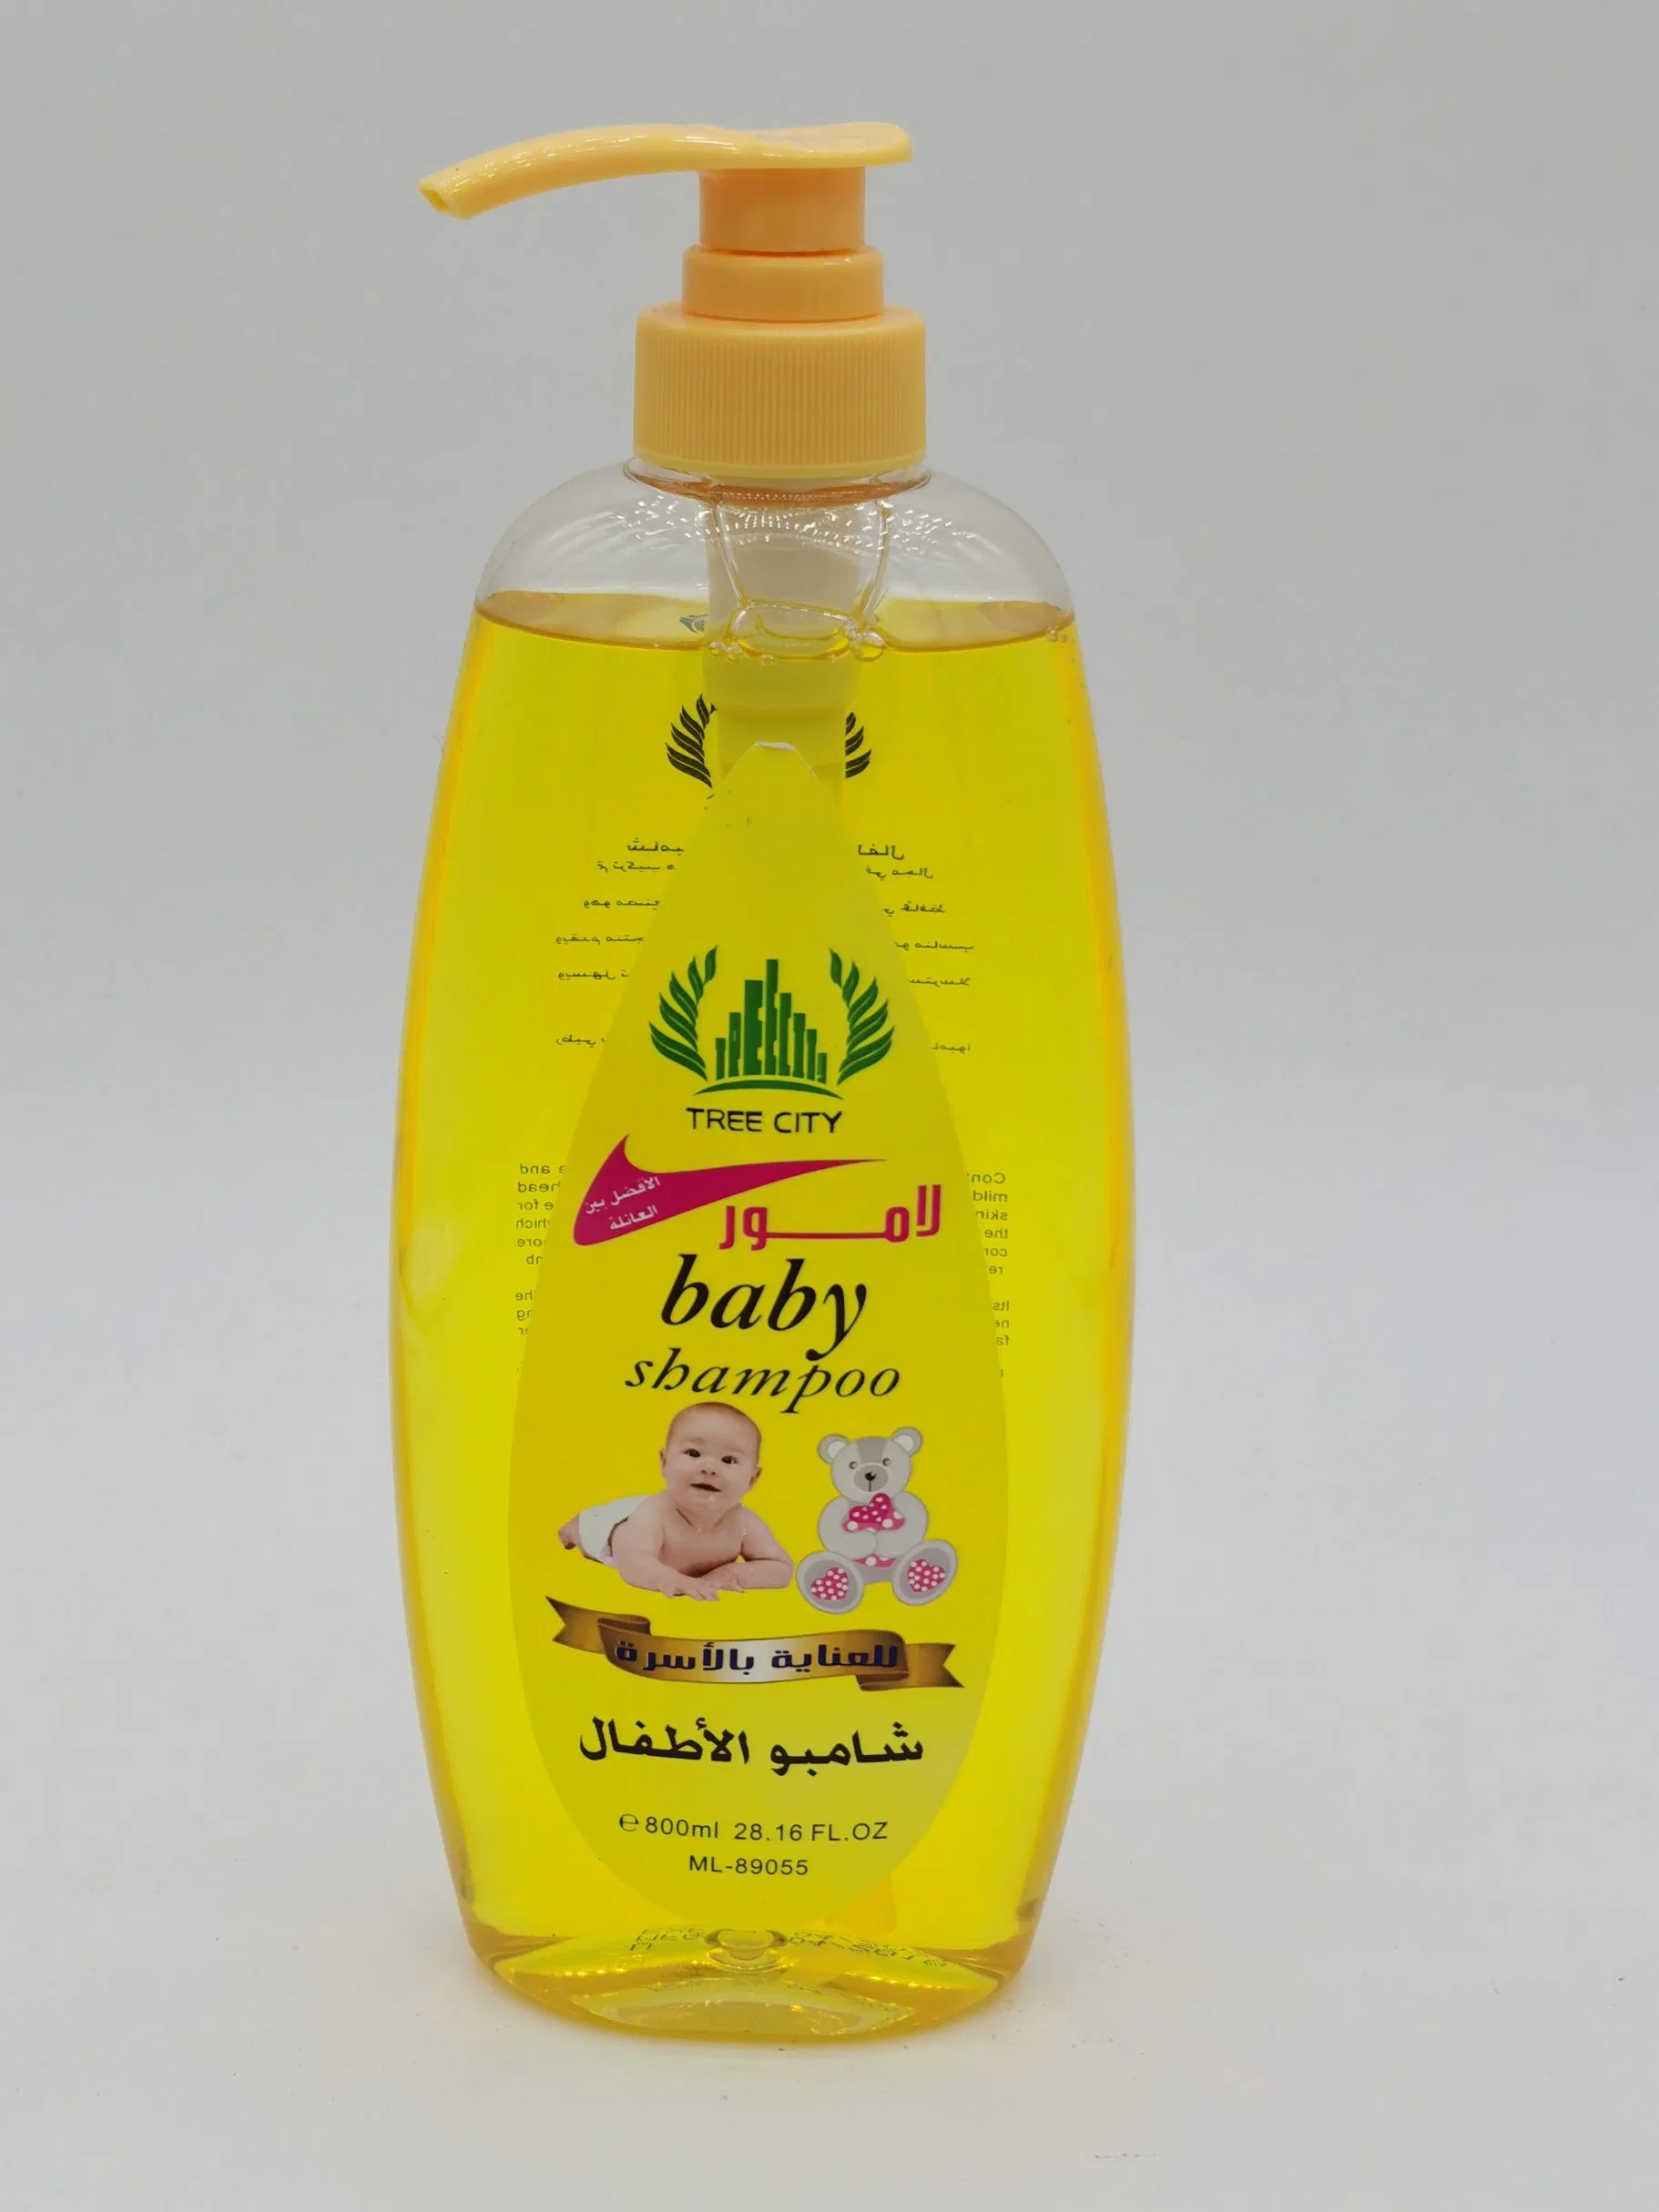 Tree City Baby Shampoo Baby Skin Care 800ml No Additives, No Preservatives, Good for Baby